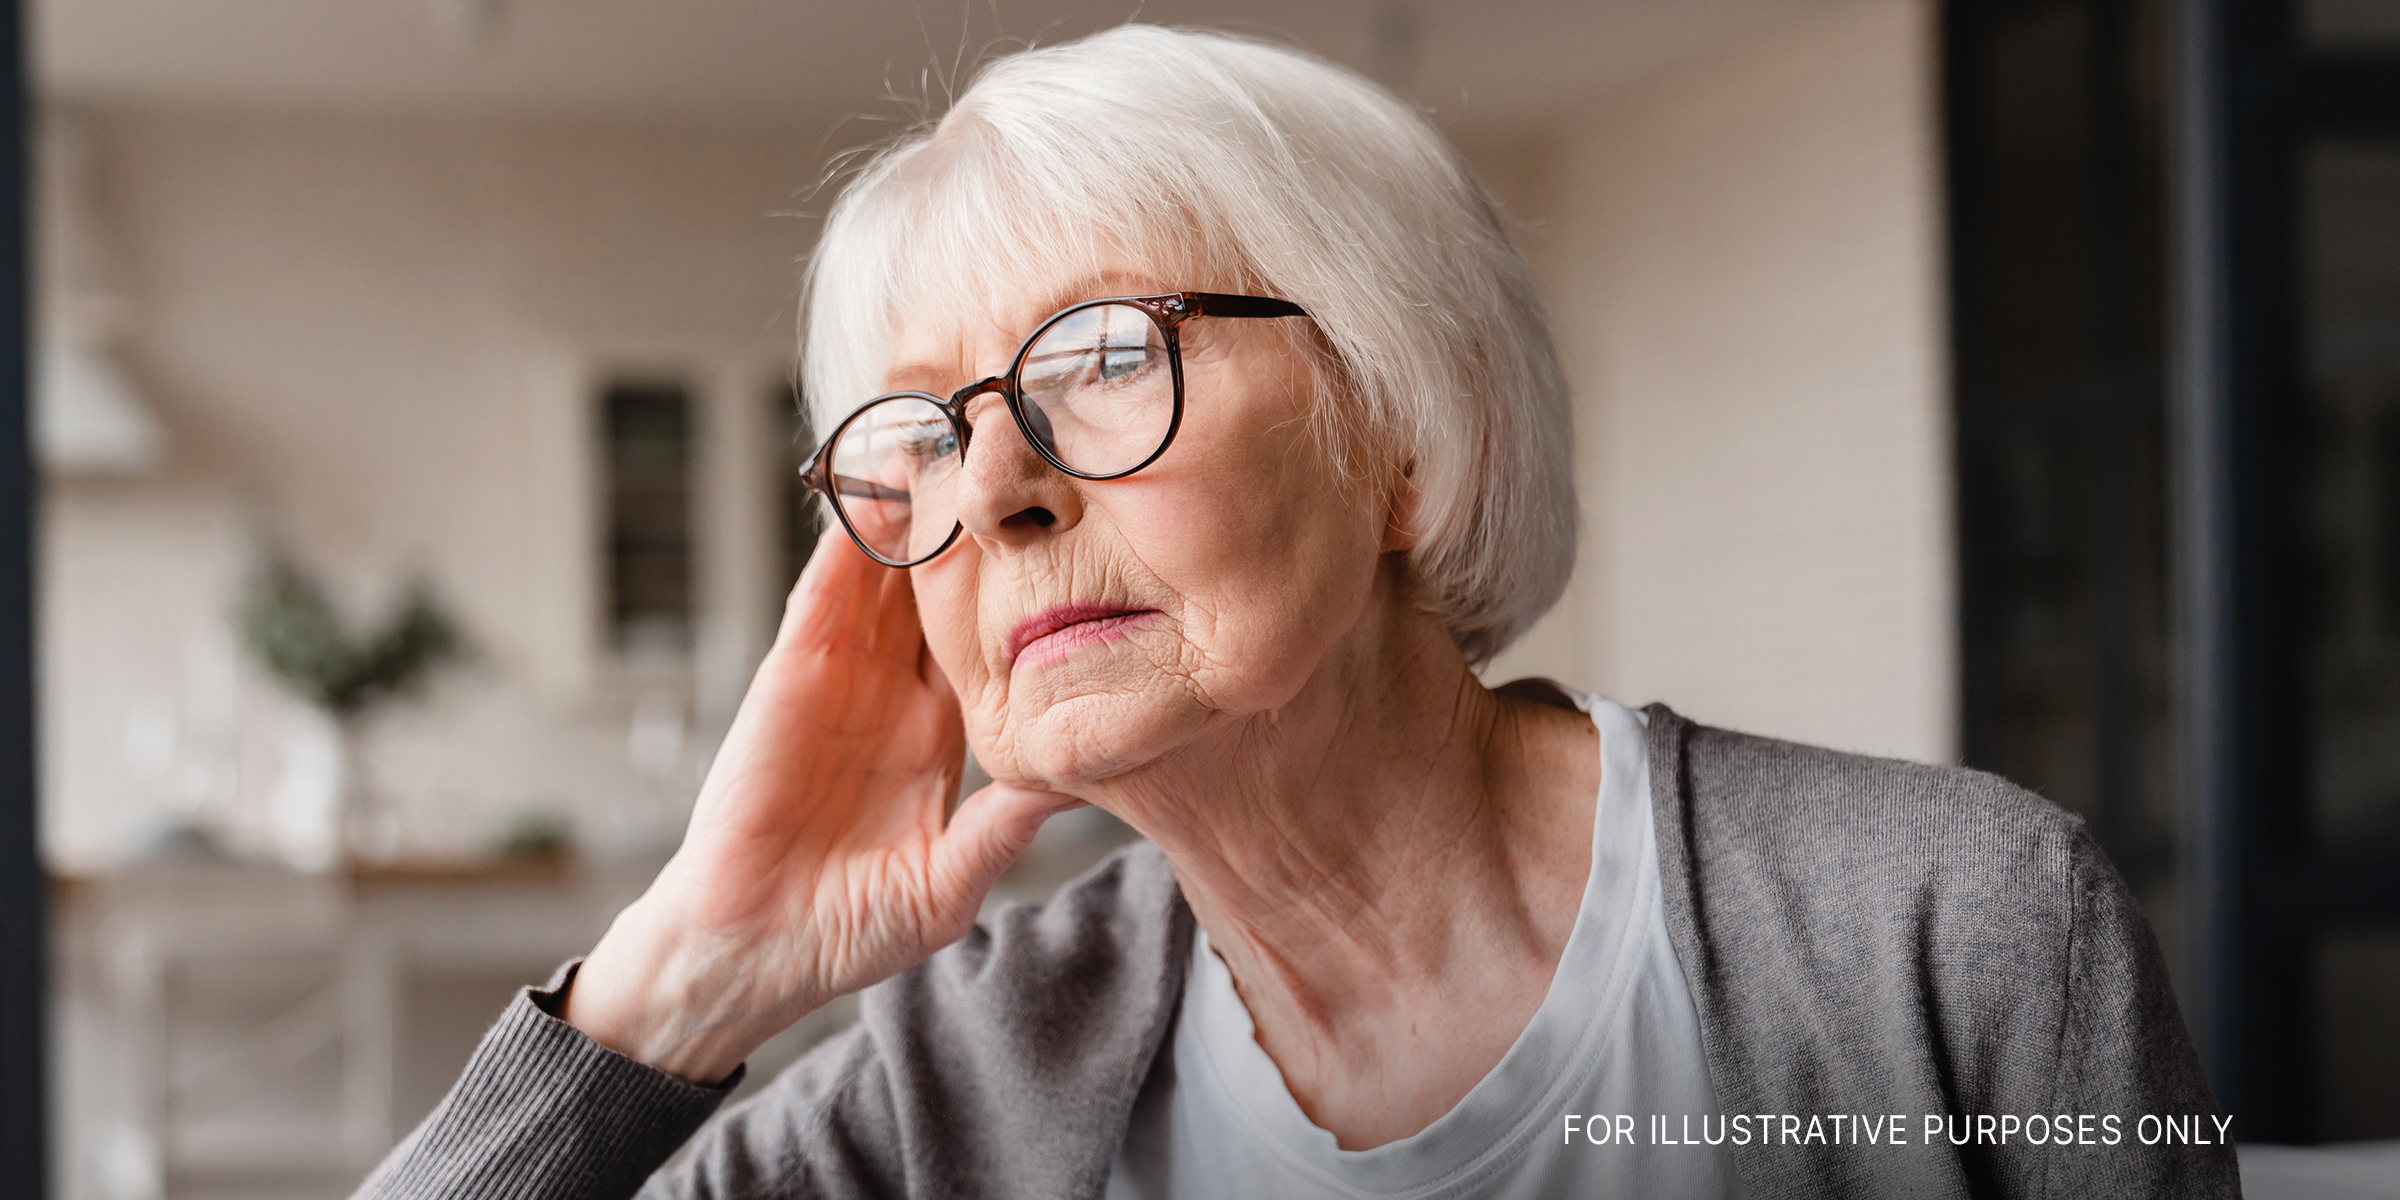 A sad senior woman | Source: Getty Images